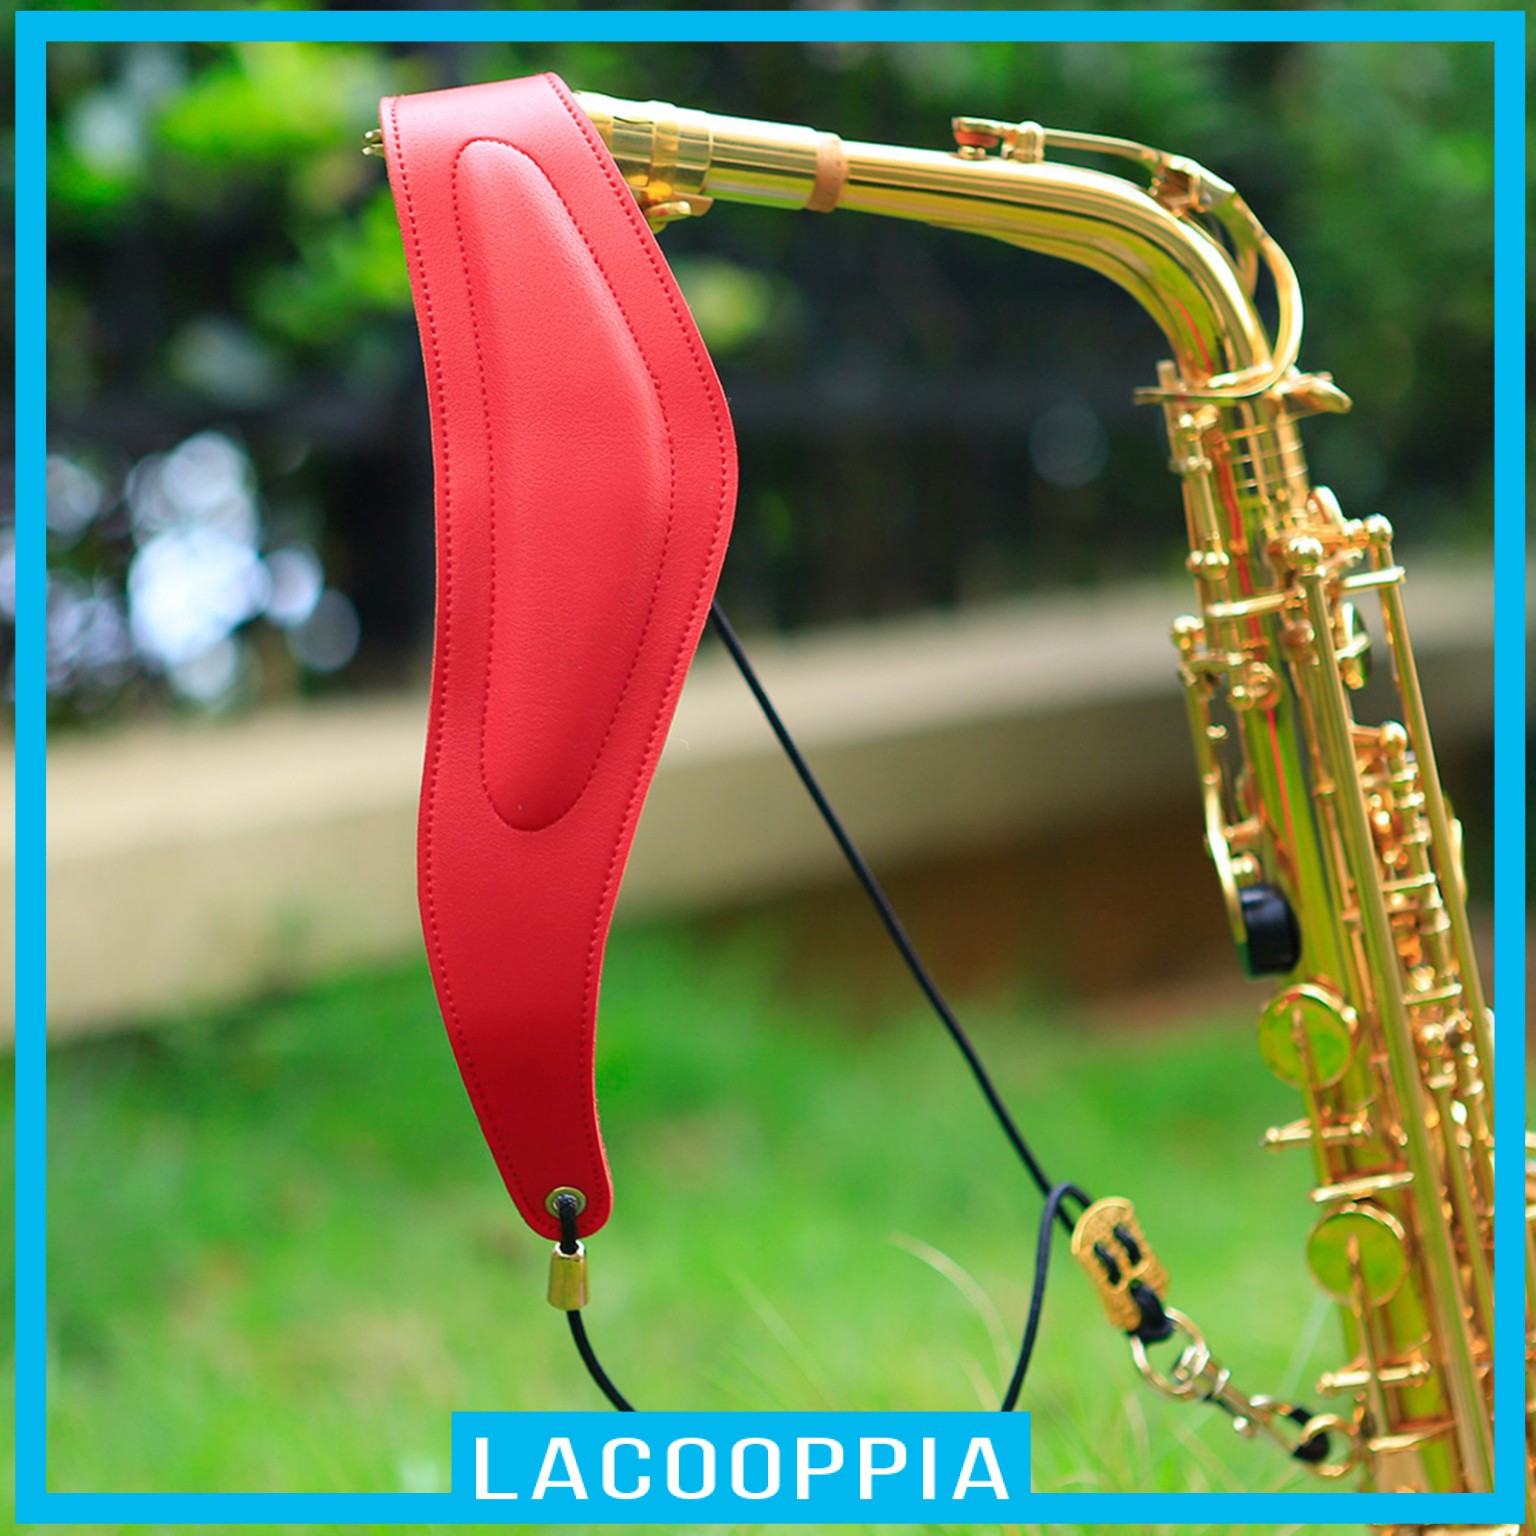 [LACOOPPIA] Saxophone Strap Alto Tenor Soprano Soft Padded Sax Neck Harness for Beginner